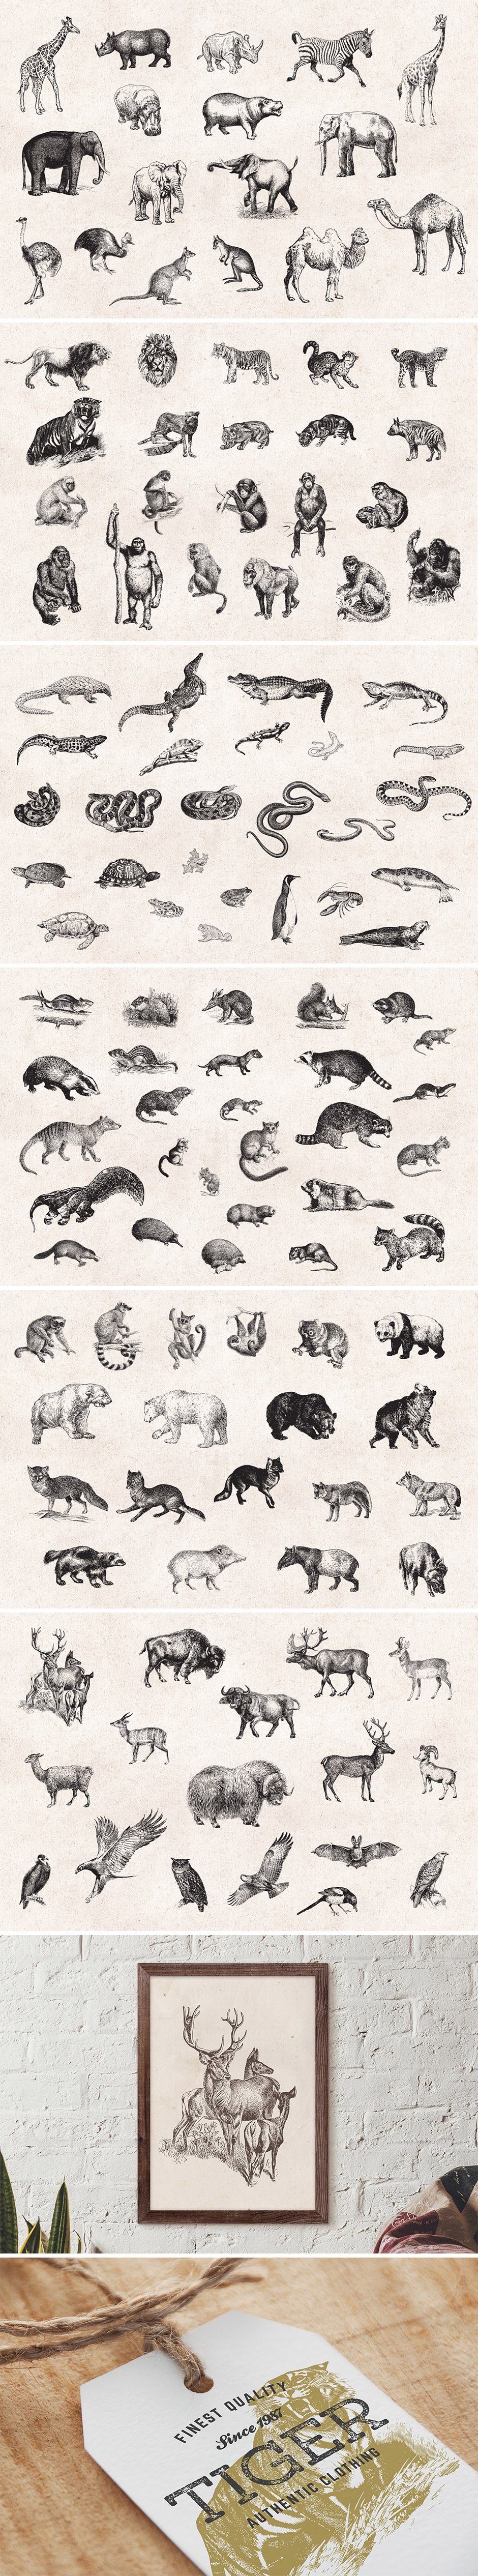 127 Wild Animals Vintage Engravings